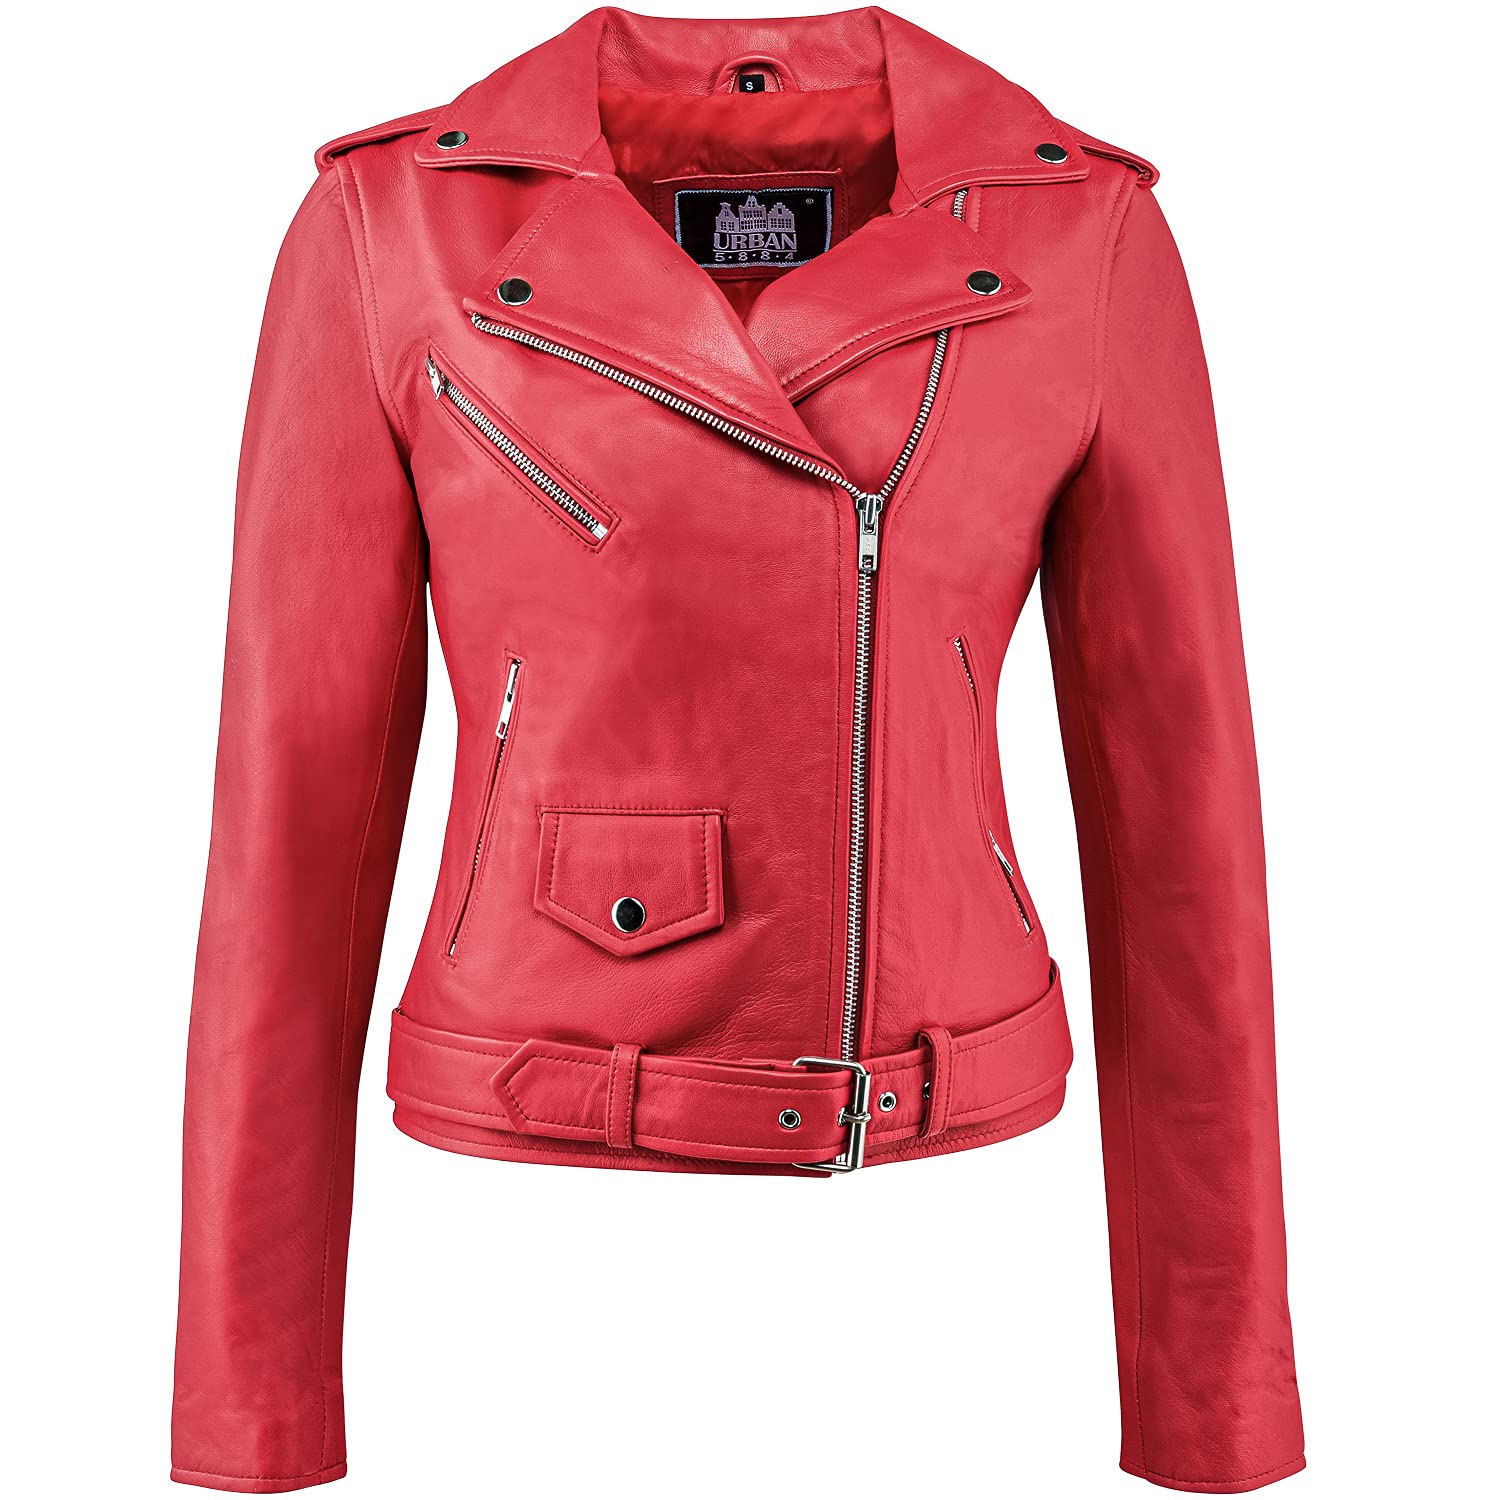 Urban Leather Perfecto Retro Damen Lederjacke Rot Lamm-Nappa, Red, Größe L - 42, UR-194 von Urban Leather